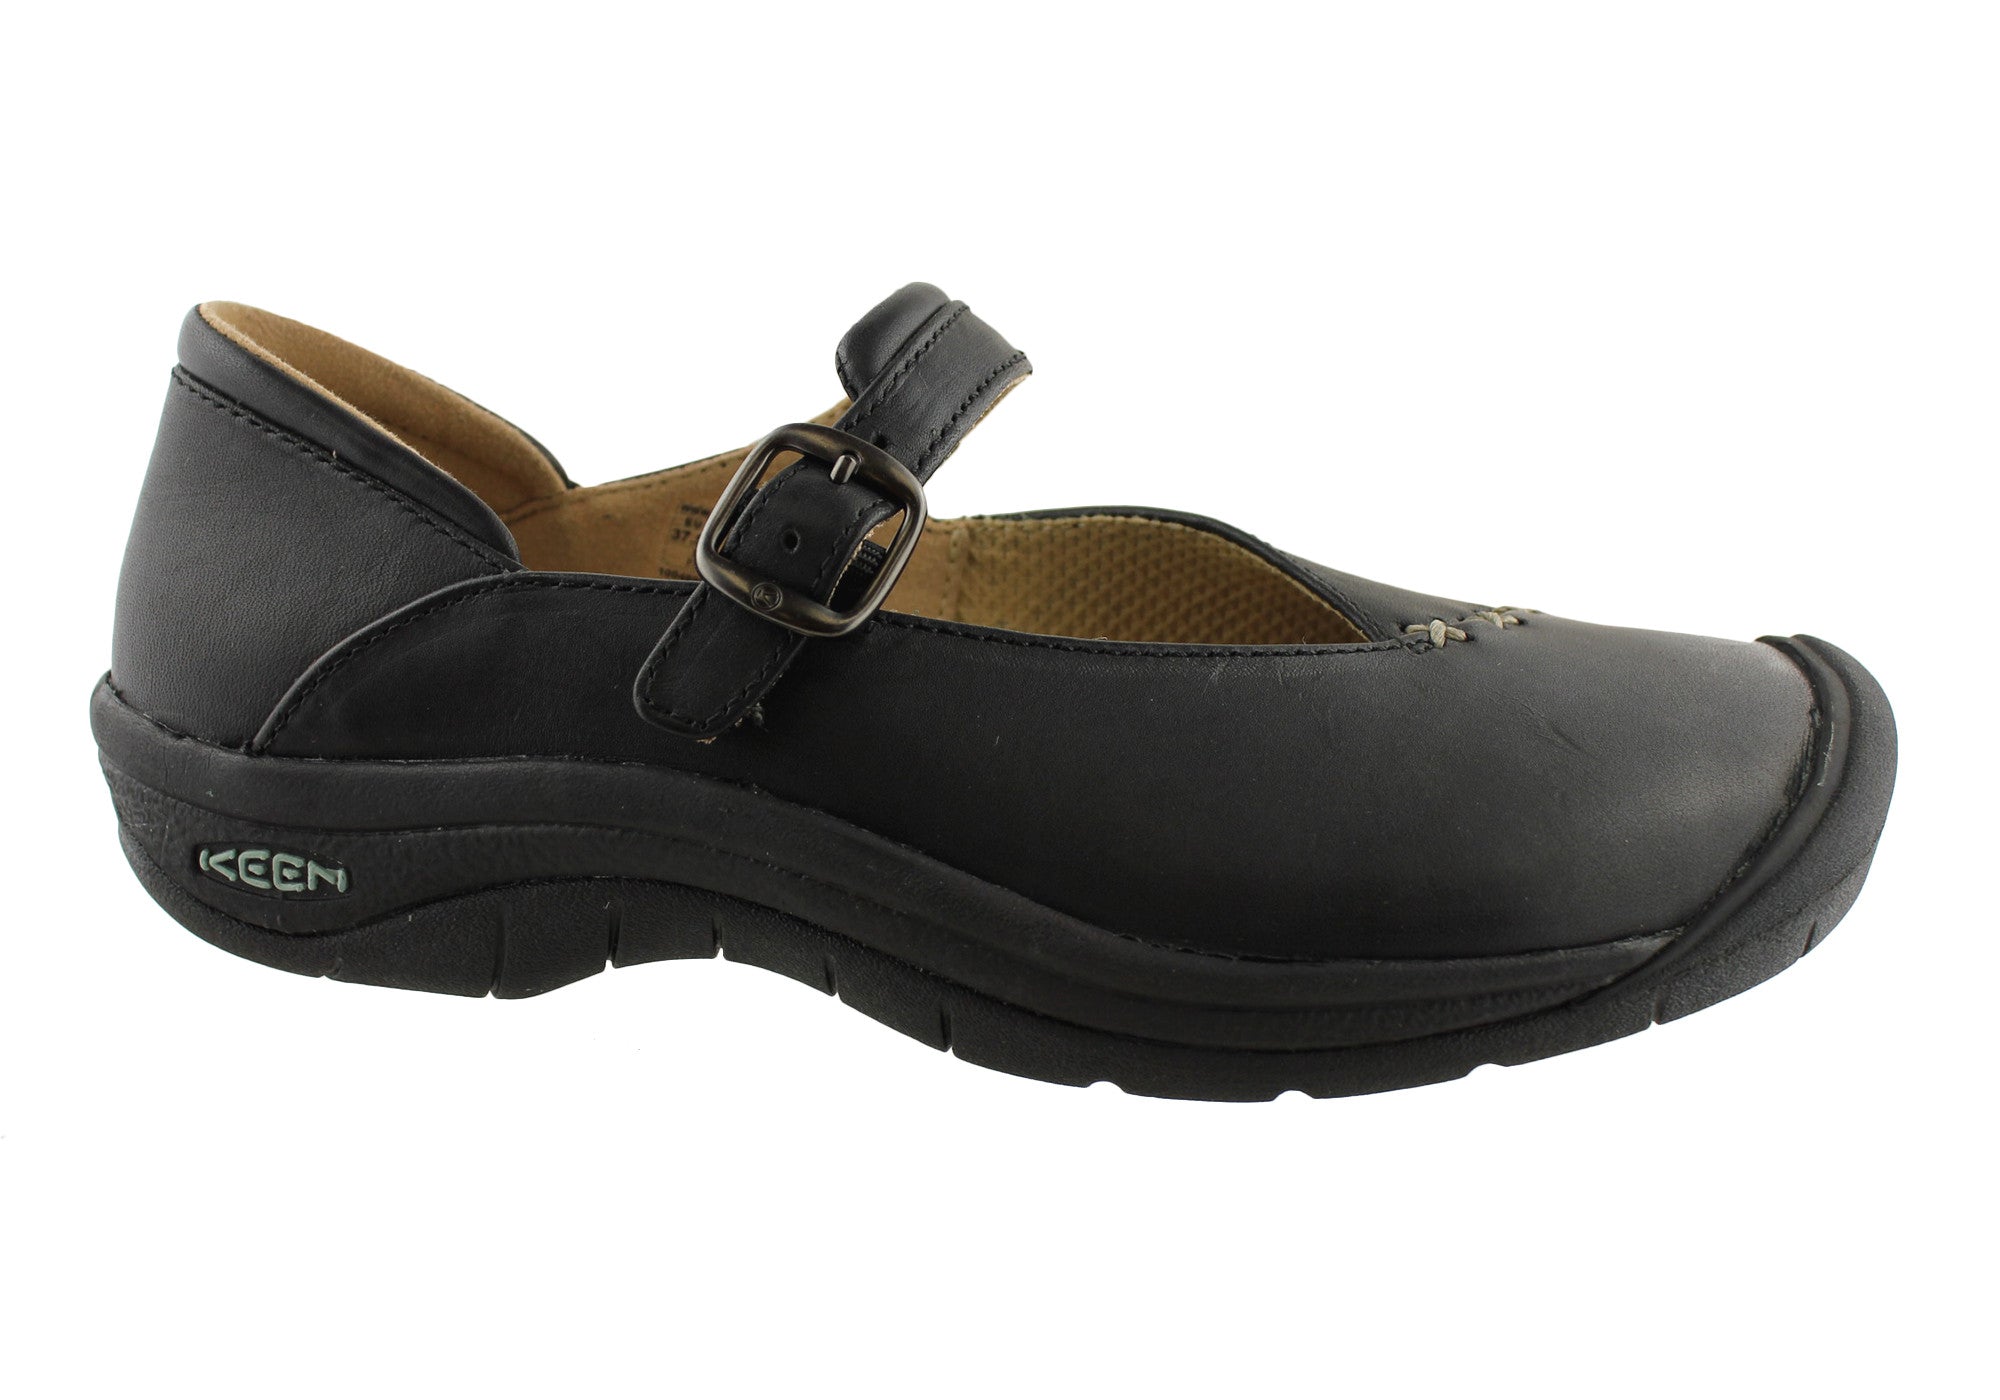 black mary jane shoes australia